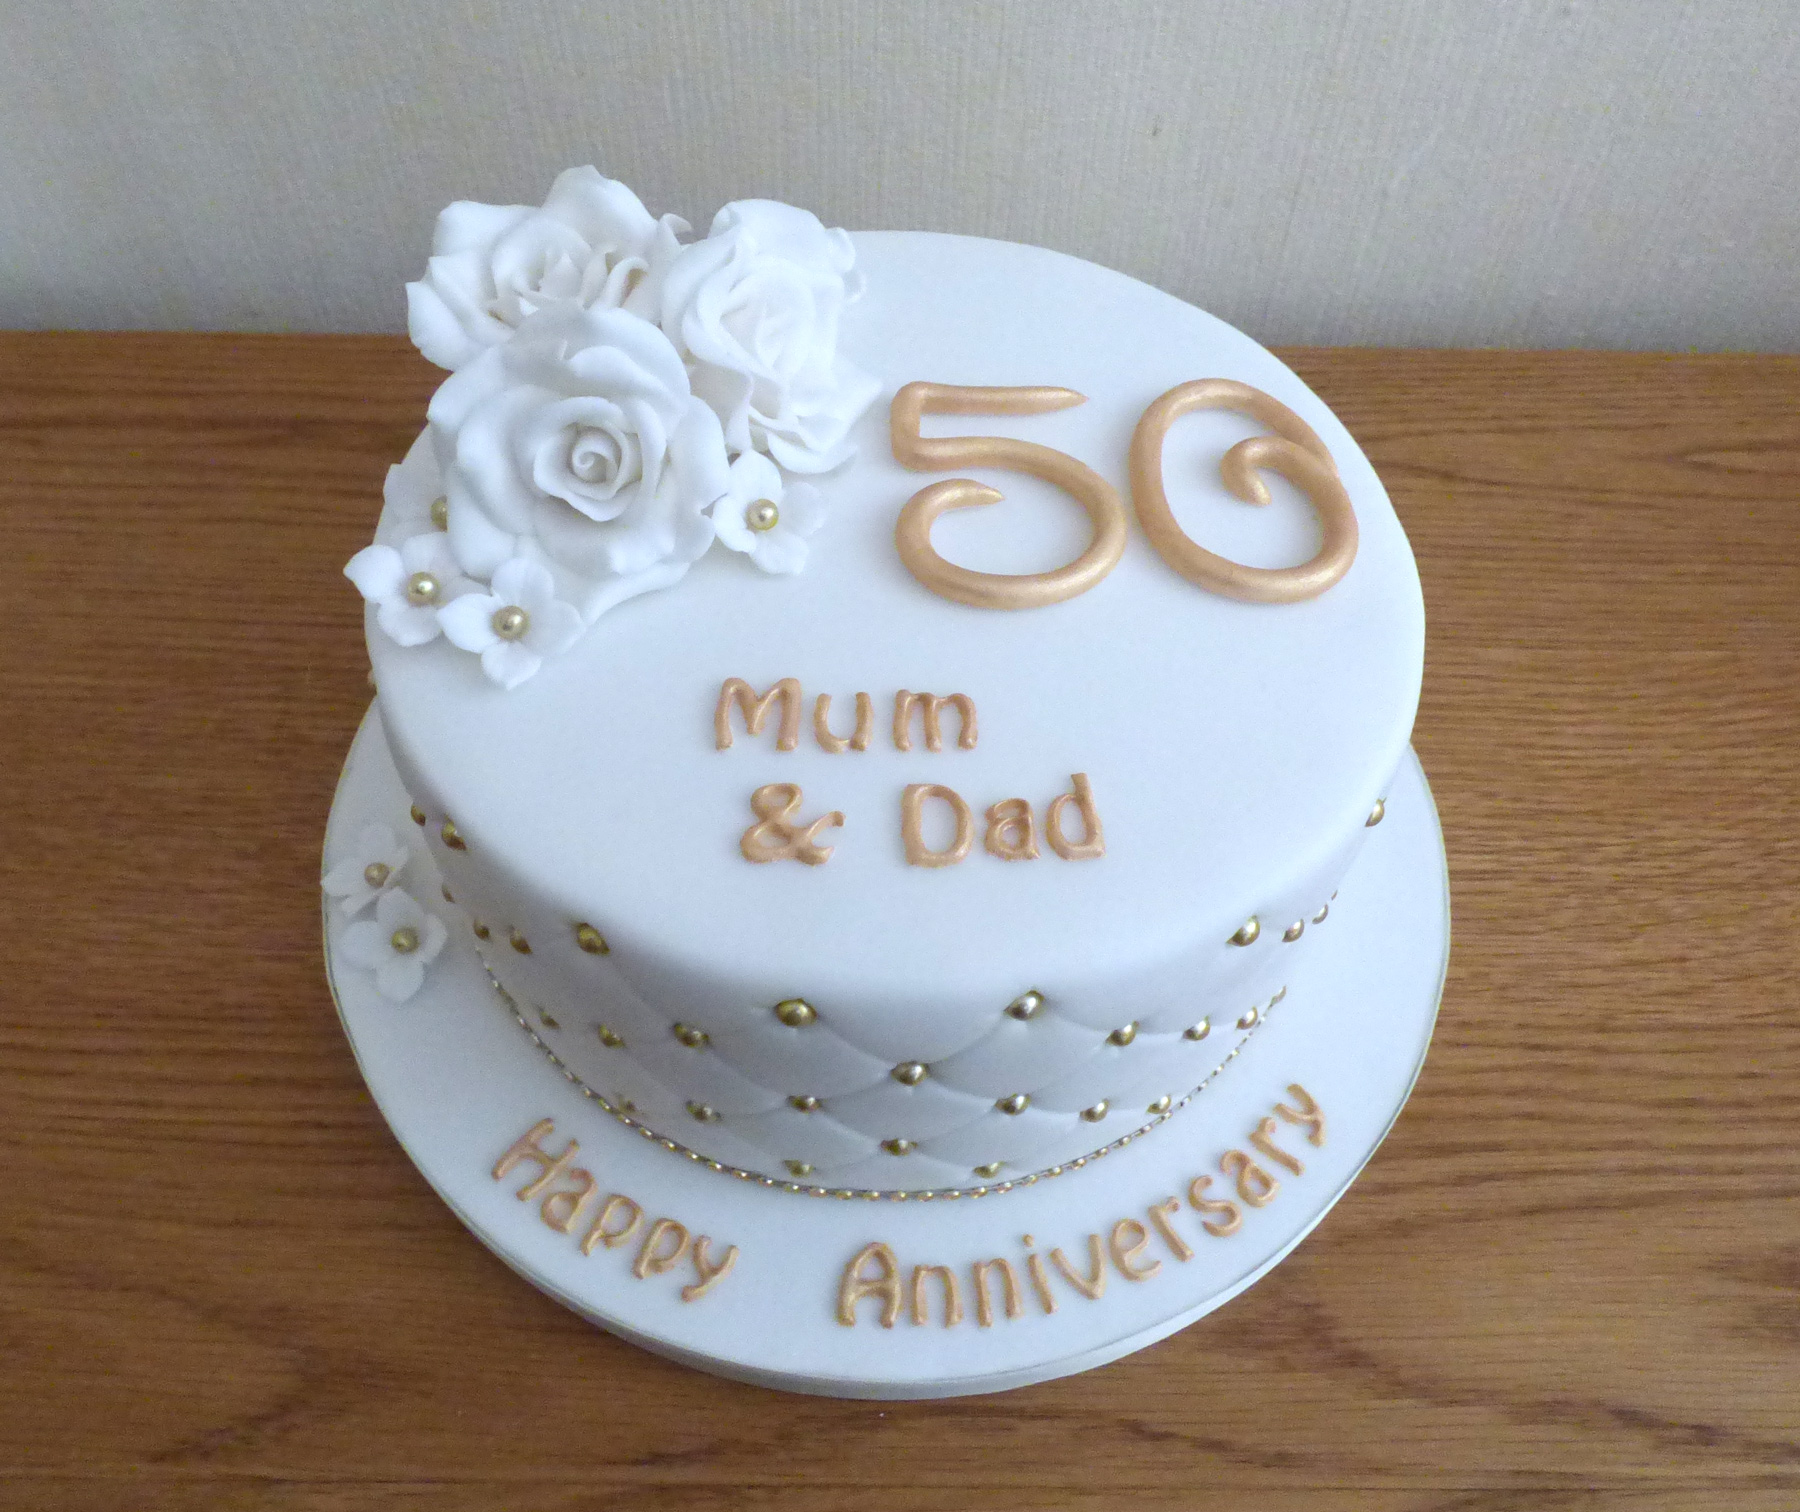 Golden Wedding Anniversary Cake - Decorated Cake by - CakesDecor